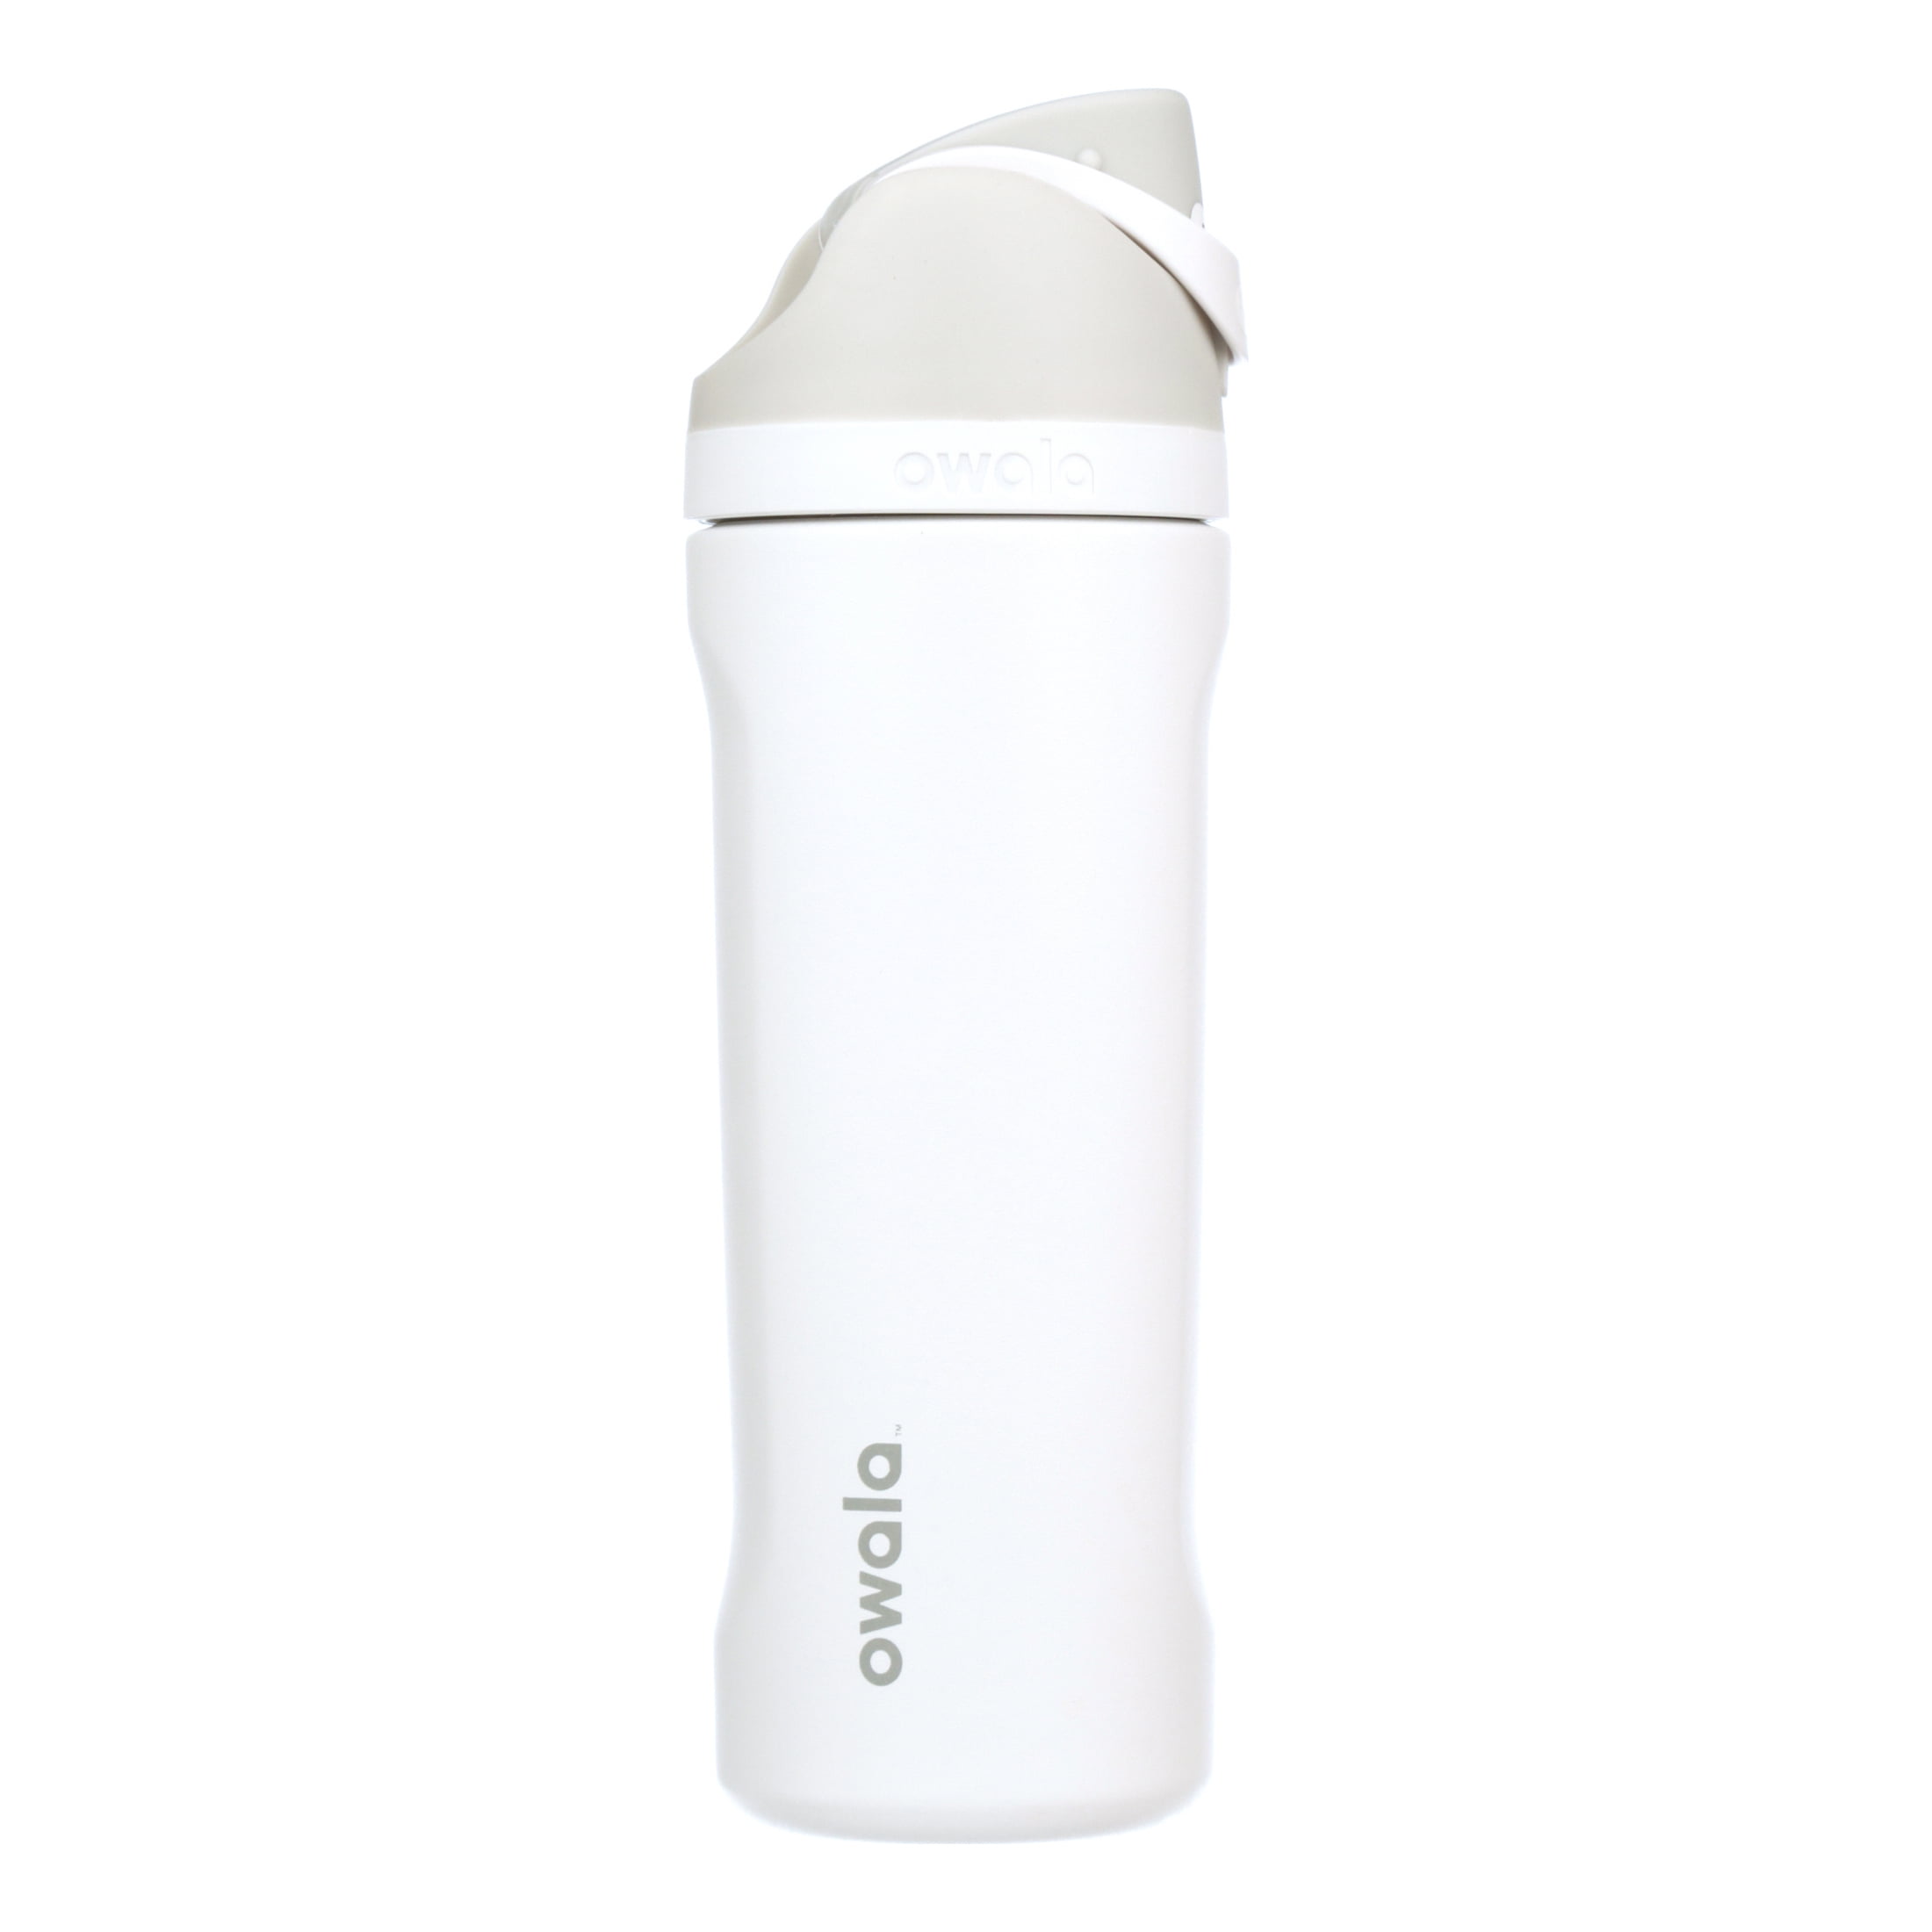 Owala Stainless Steel FreeSip Water Bottle - White, 40 oz - King Soopers